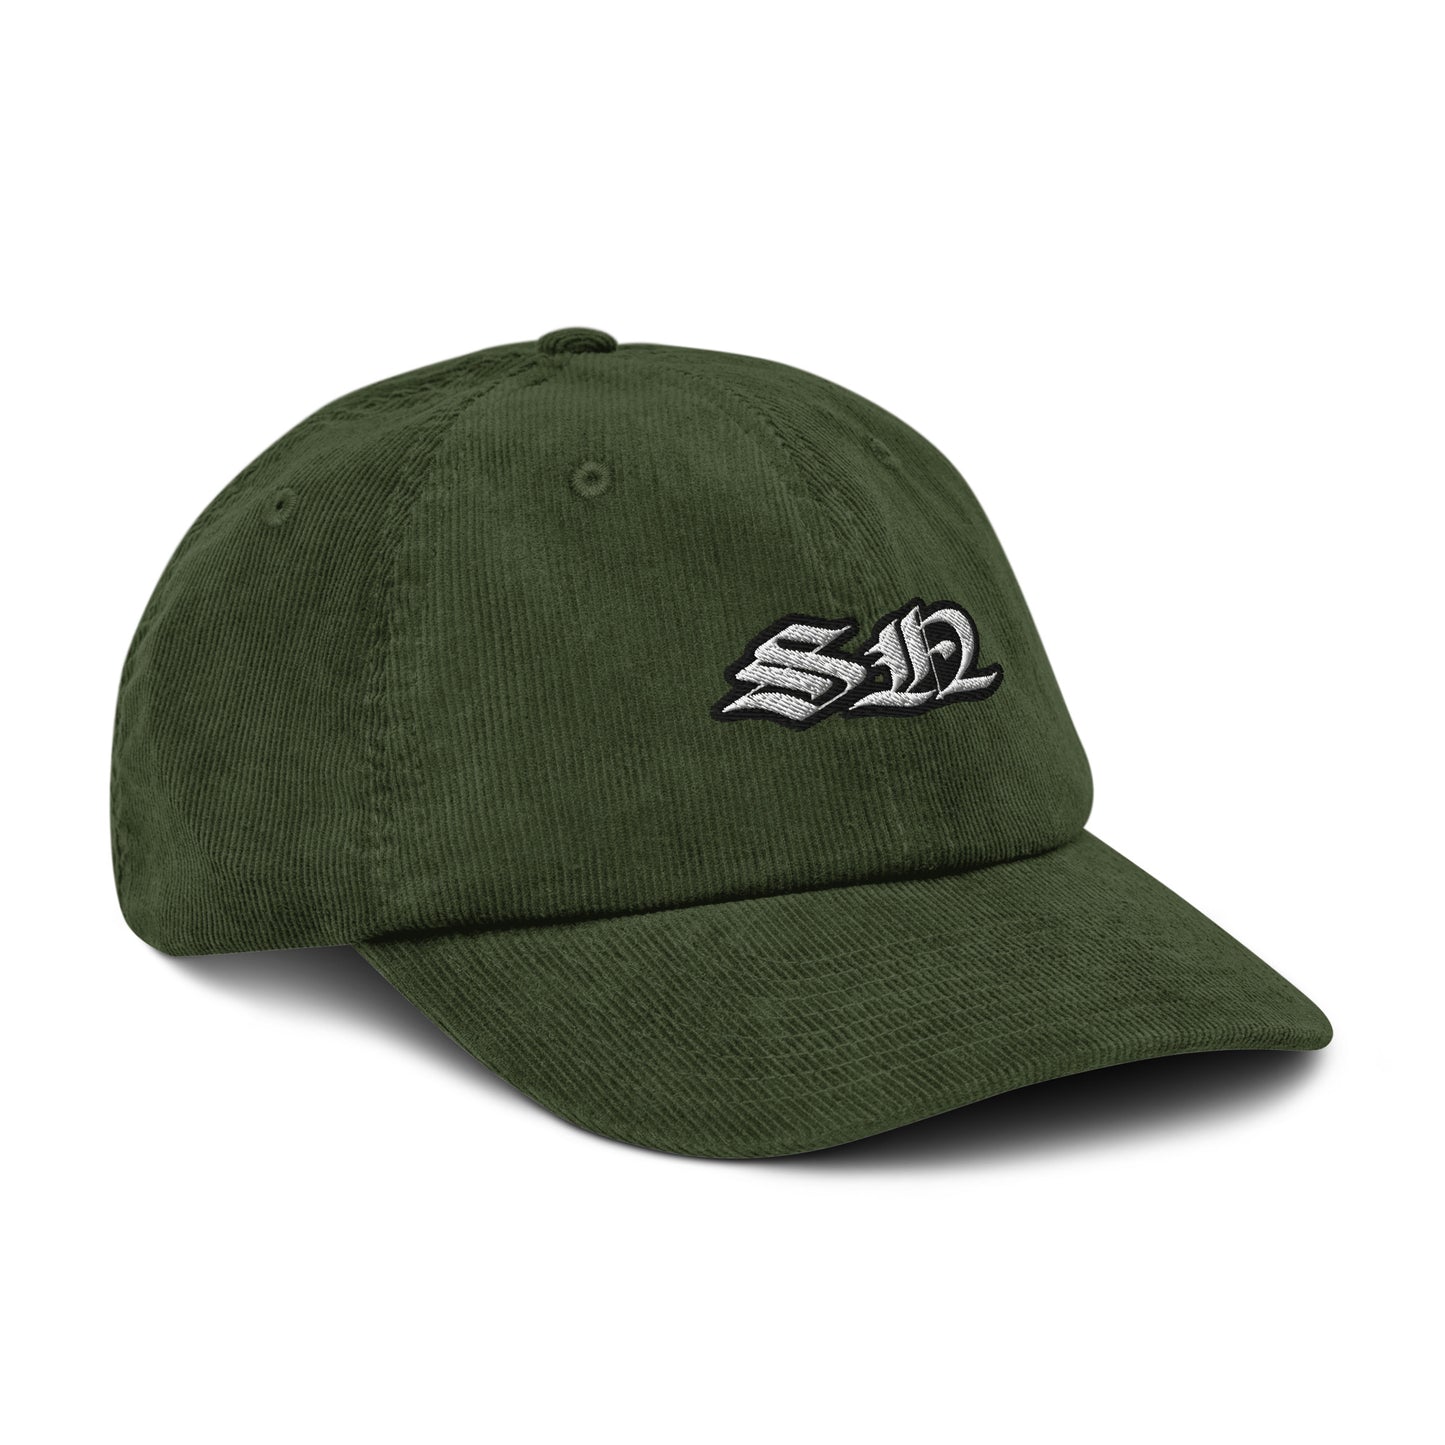 SN Corp embroidered velvet cap